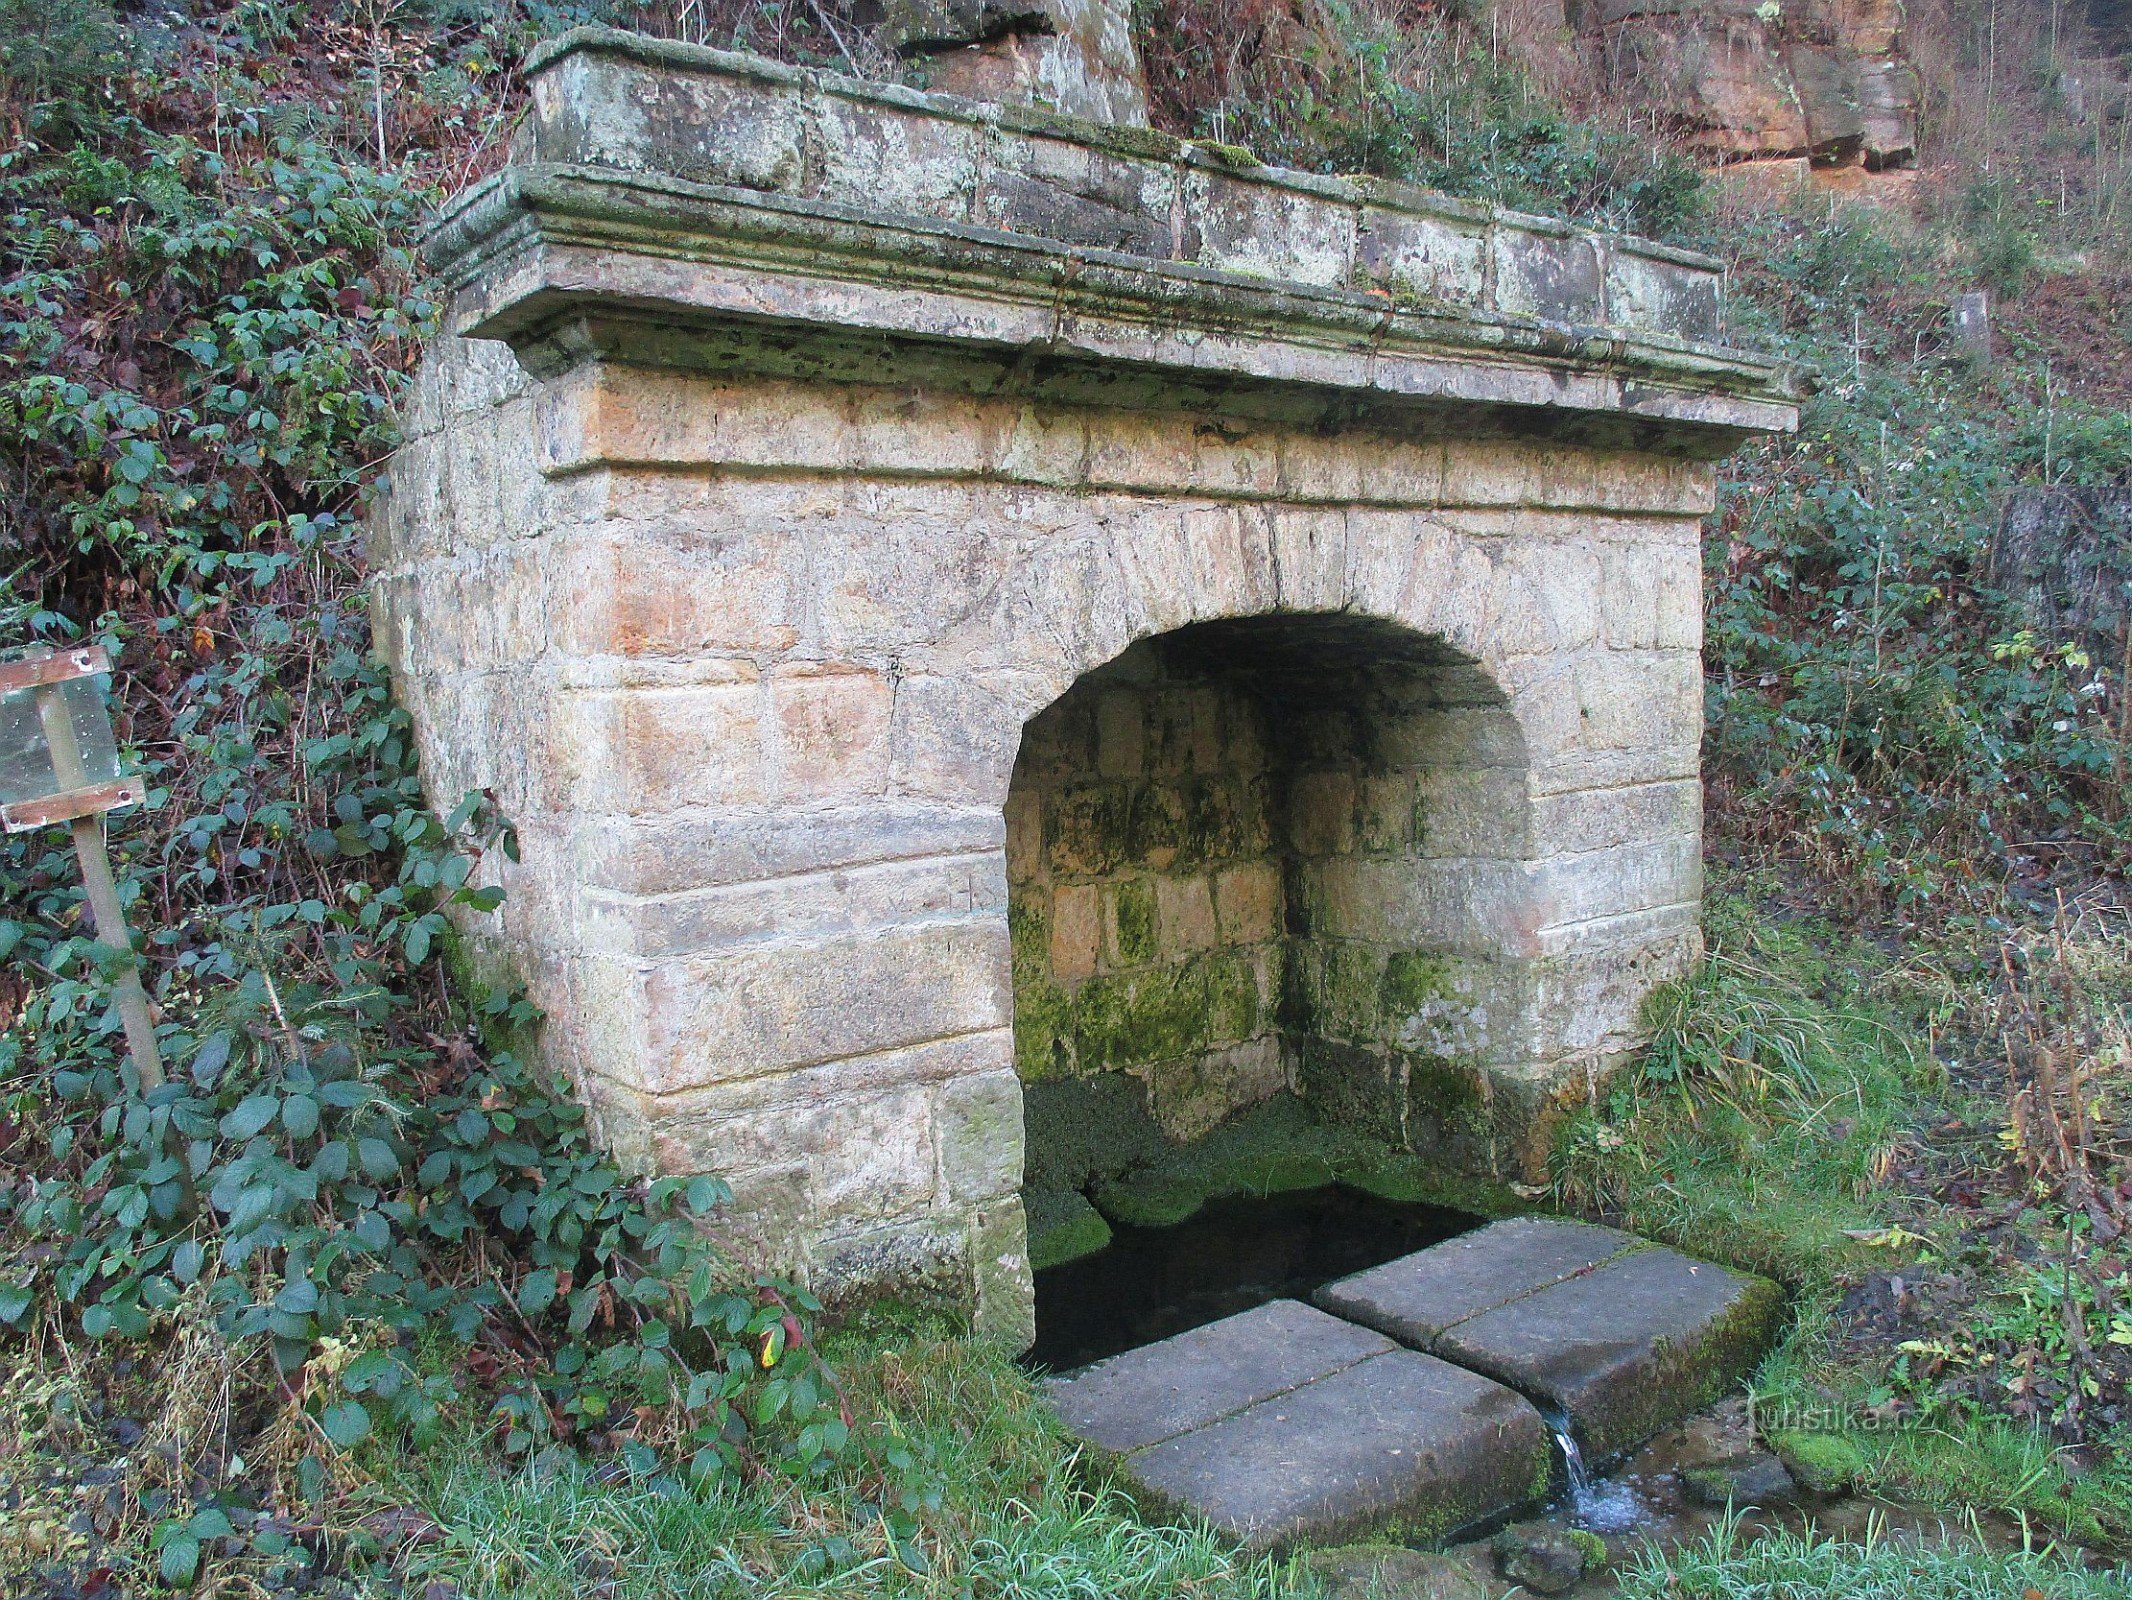 Prince's well